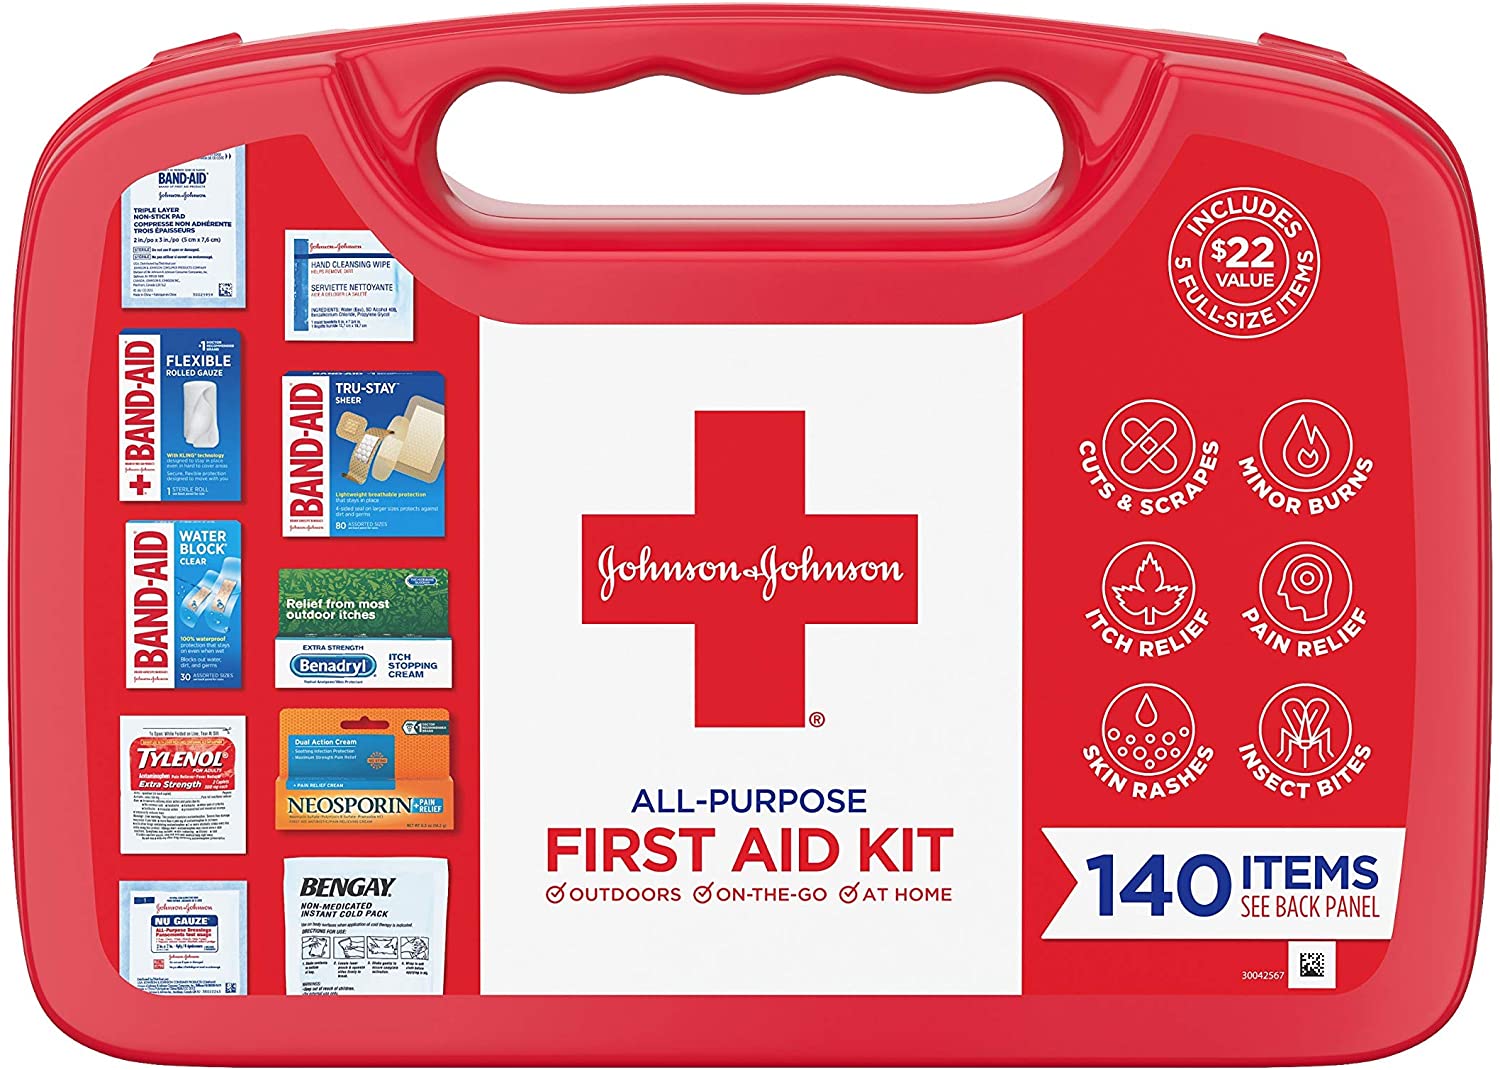 140 pcs. Johnson & Johnson / Band-Aid / Tylenol / Neosporin All-Purpose Portable Compact First Aid Kit $9.50 w/s&s